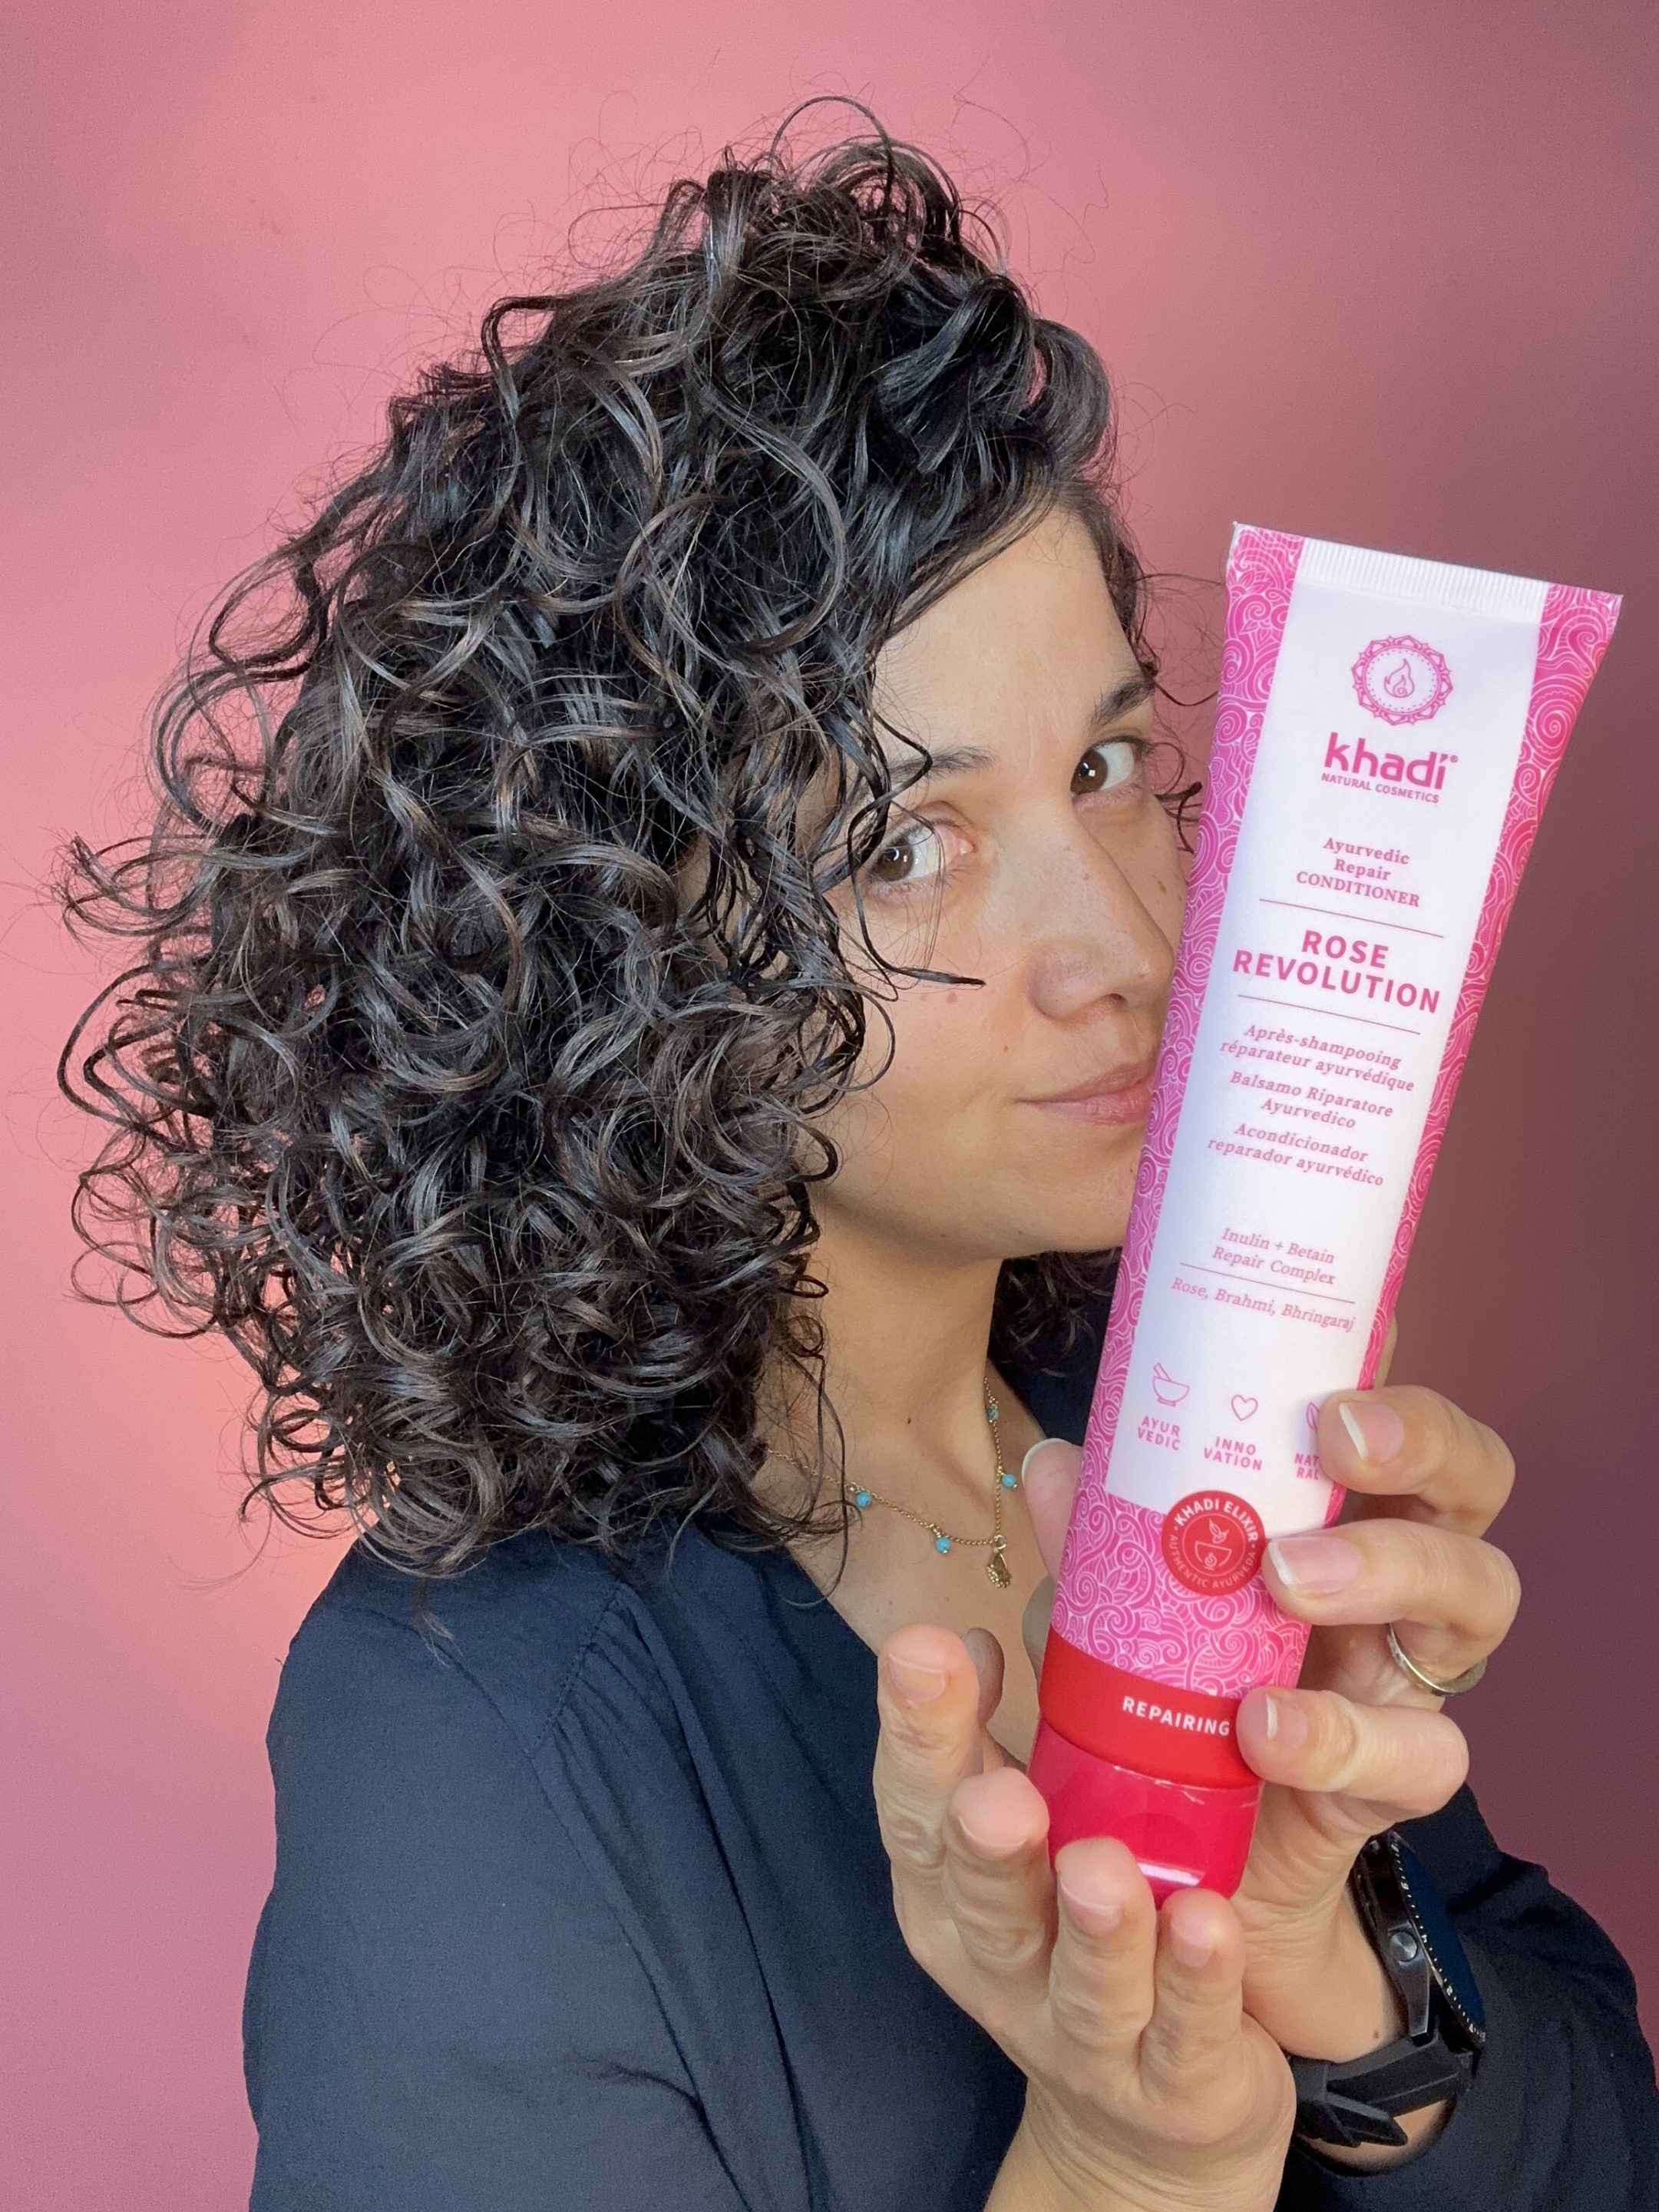 LE khadi Rose Revolution : l’après-shampooing naturel qui va sublimer tes cheveux